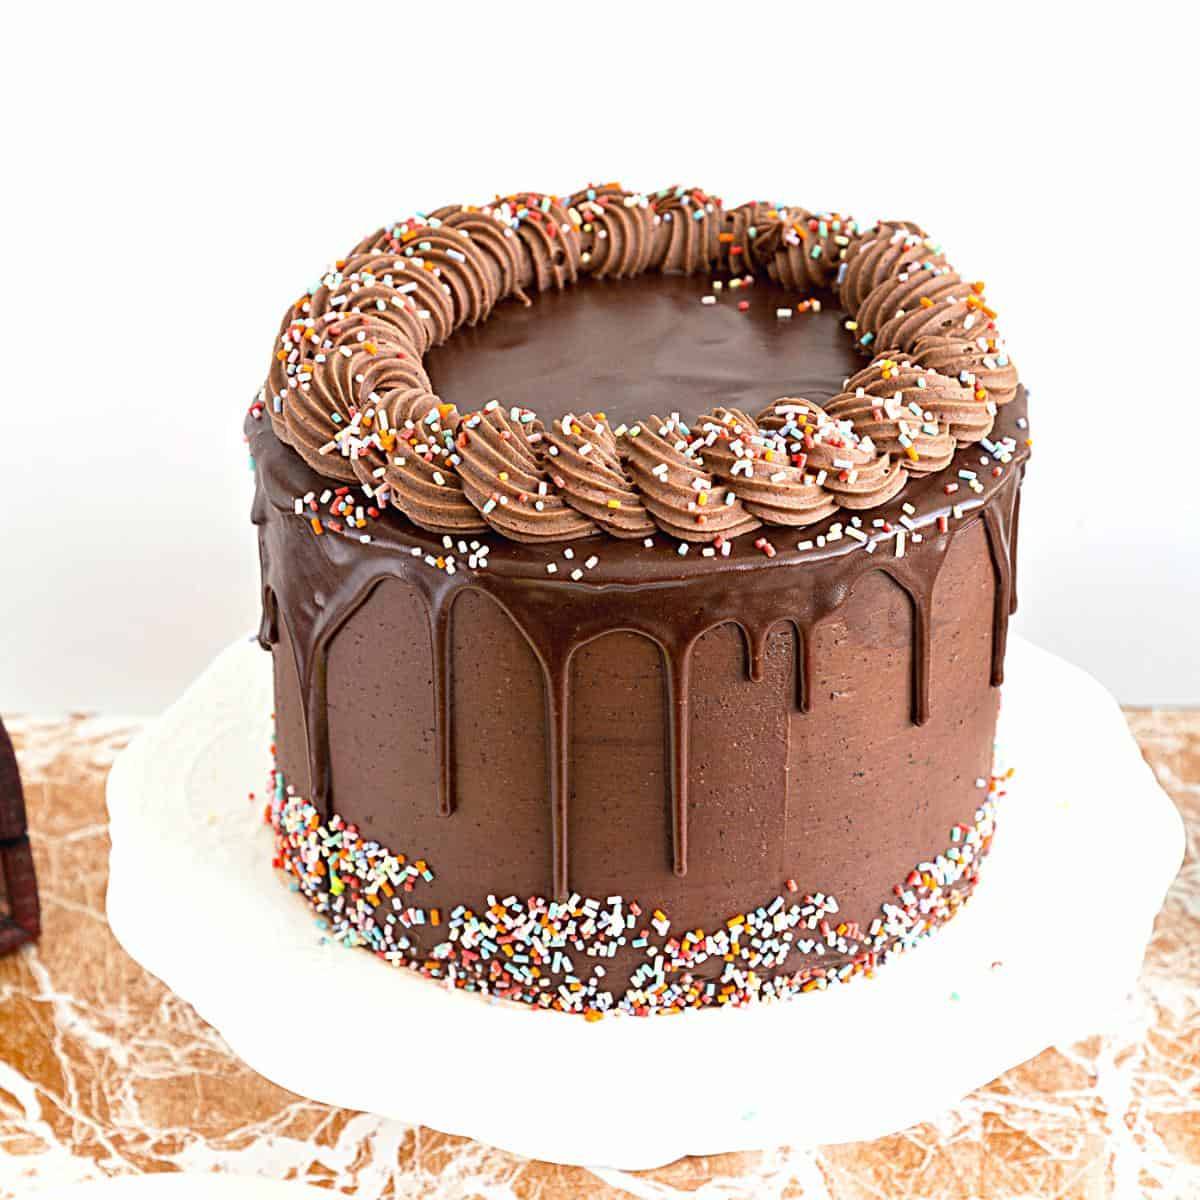 A chocolate cake on cake stand.